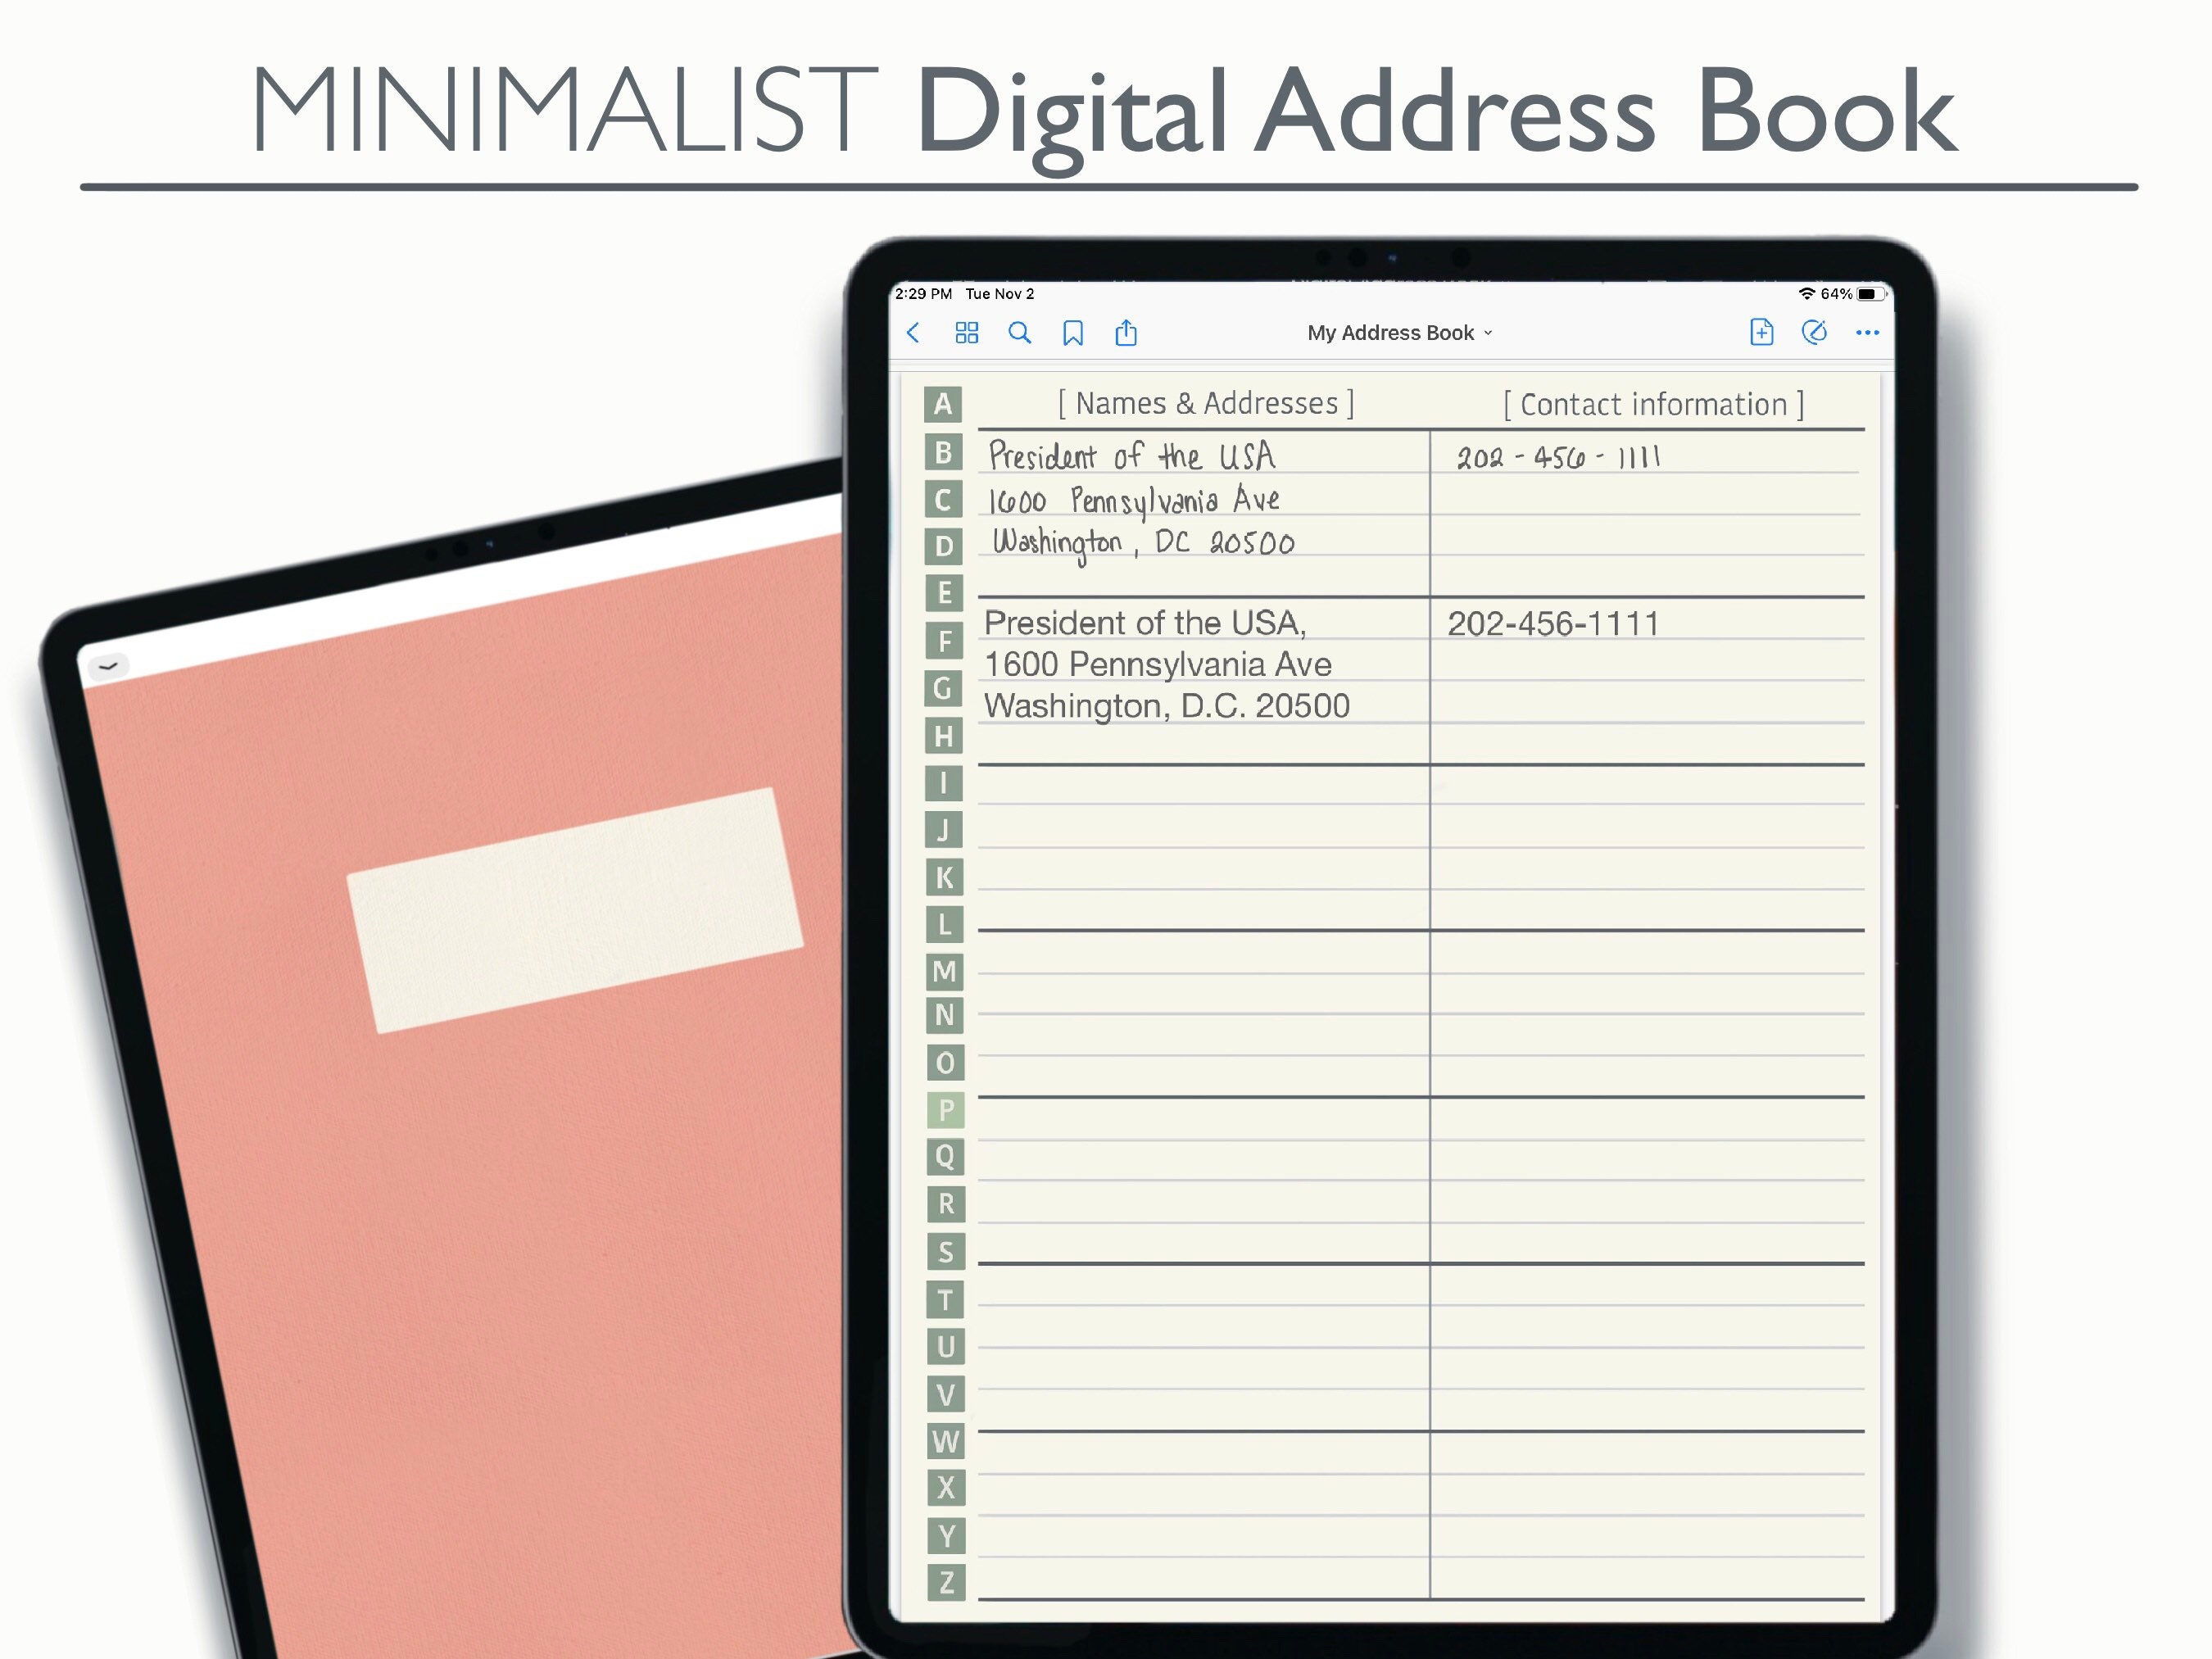 A-Z Digital Address Book | Realistic Landscape Contact Journal